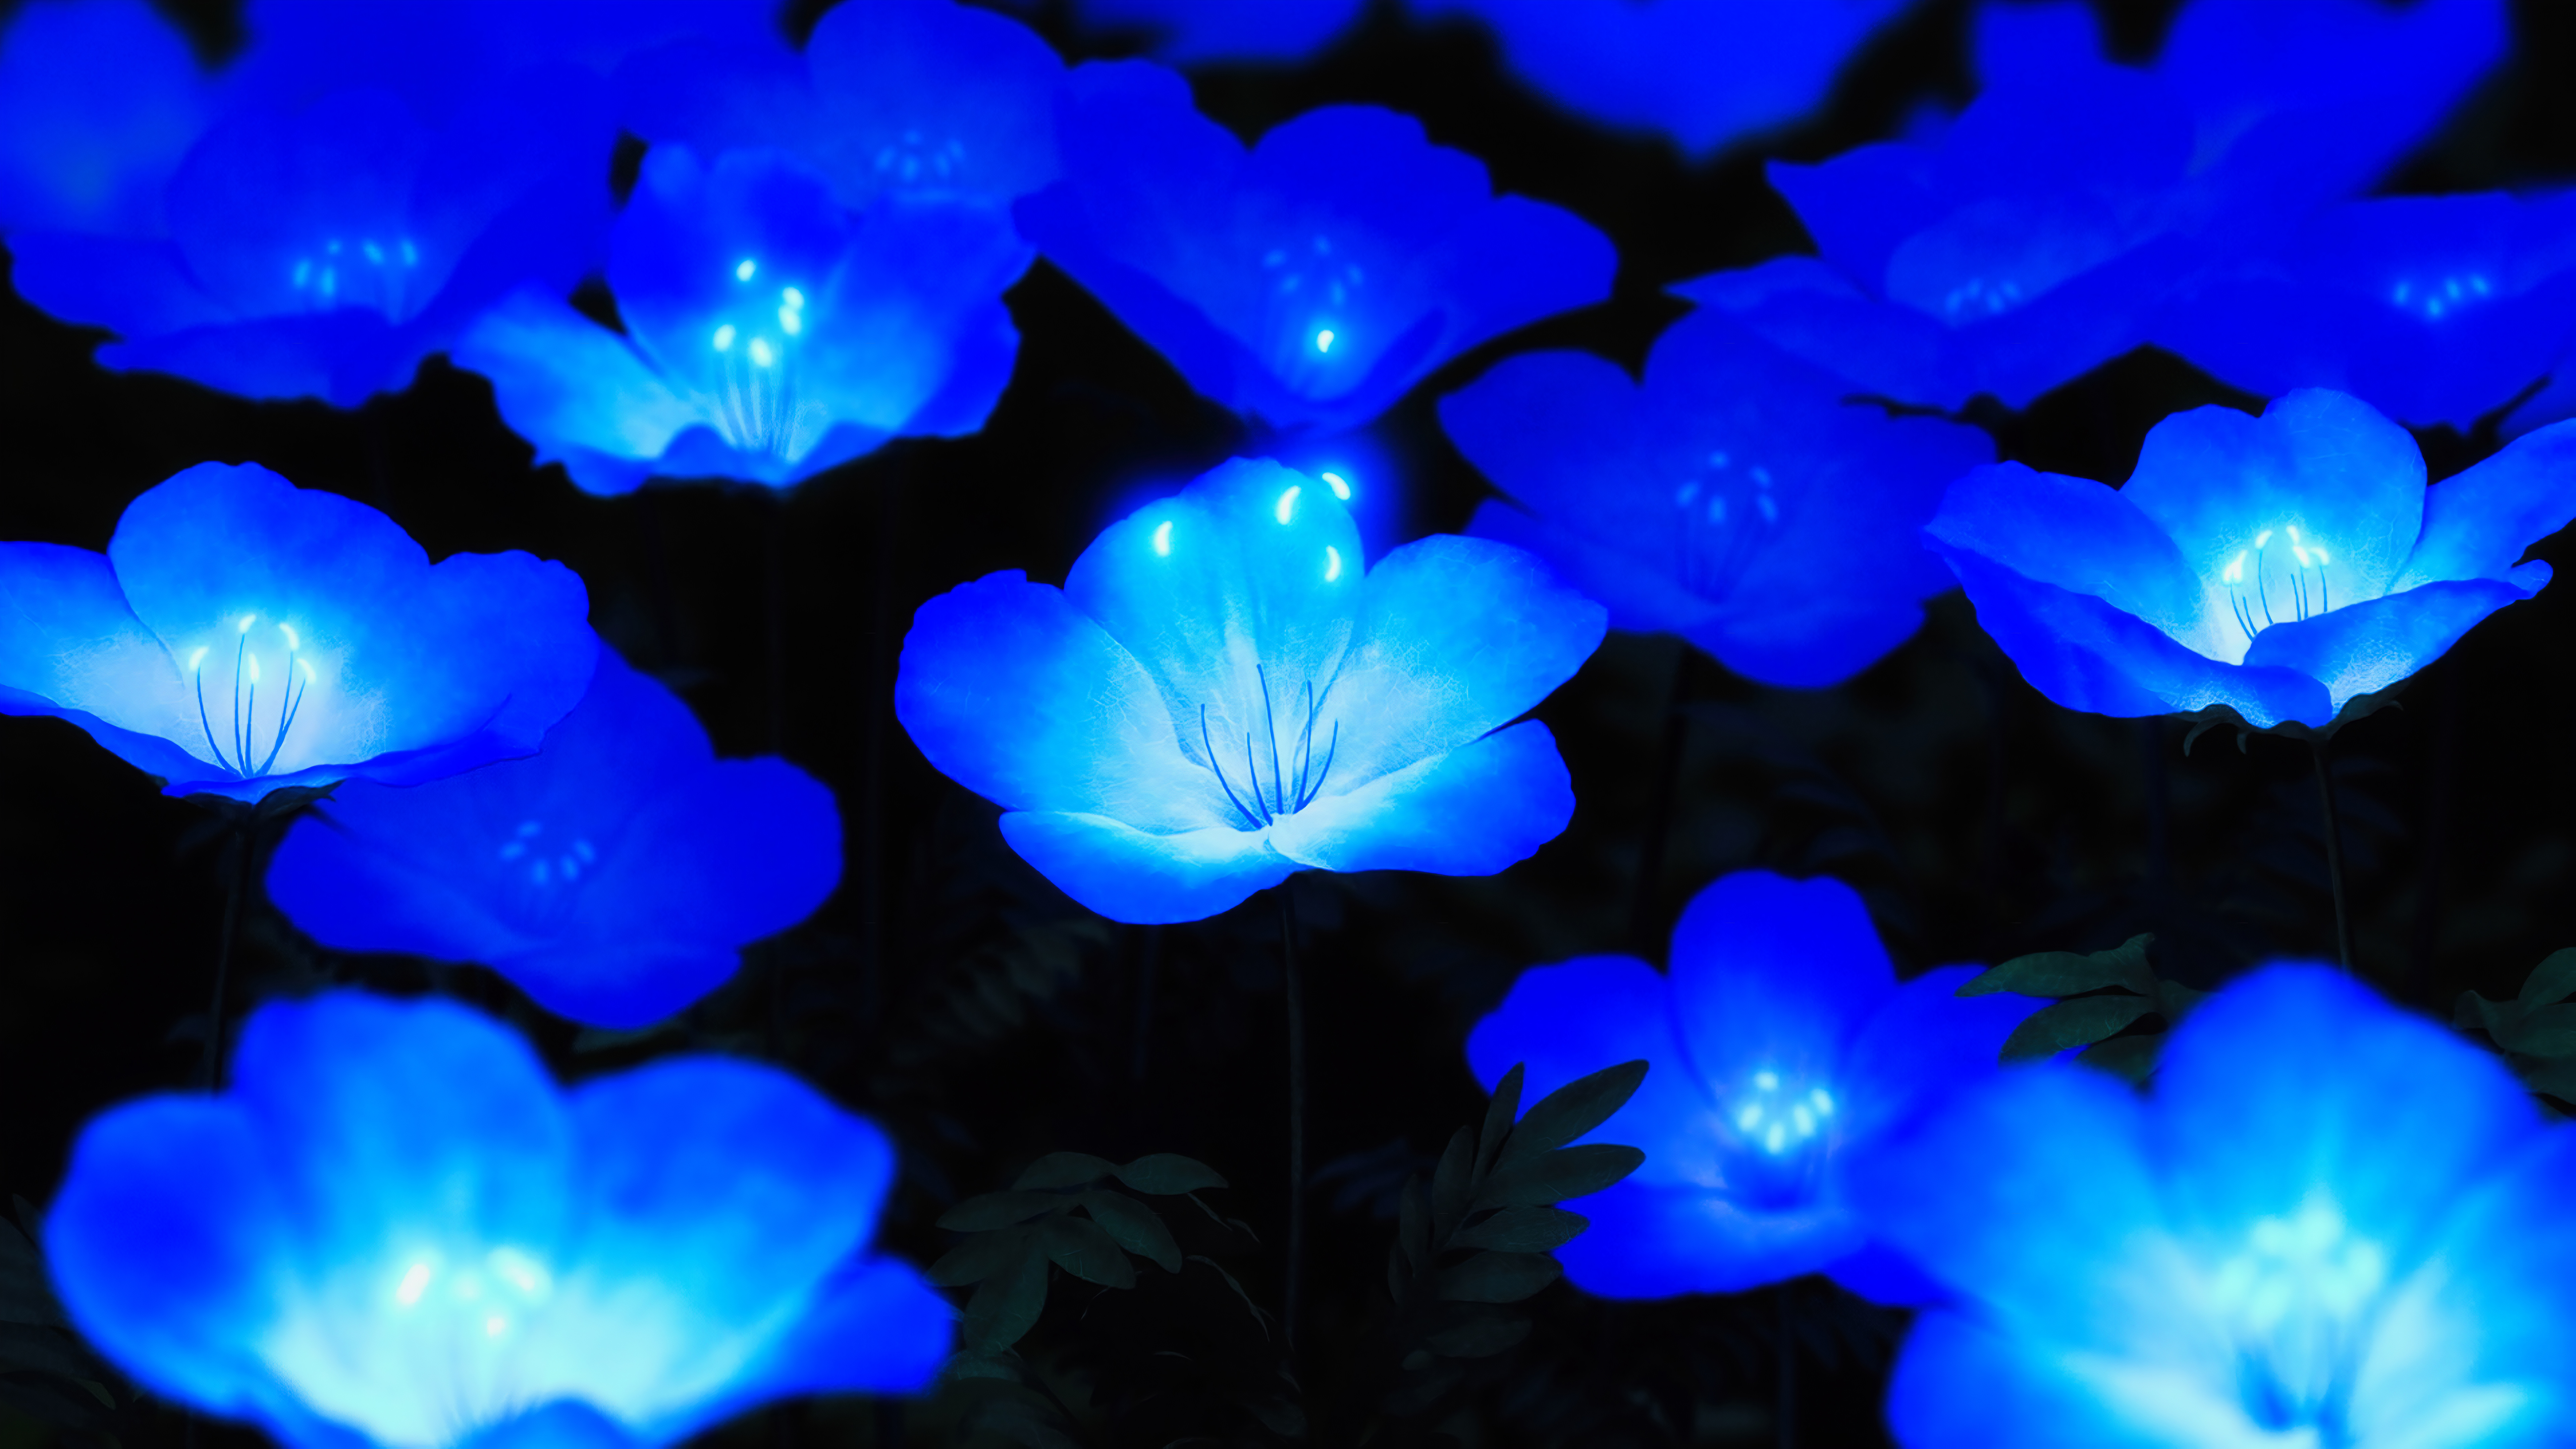 General 7680x4320 blue flowers glowing digital art